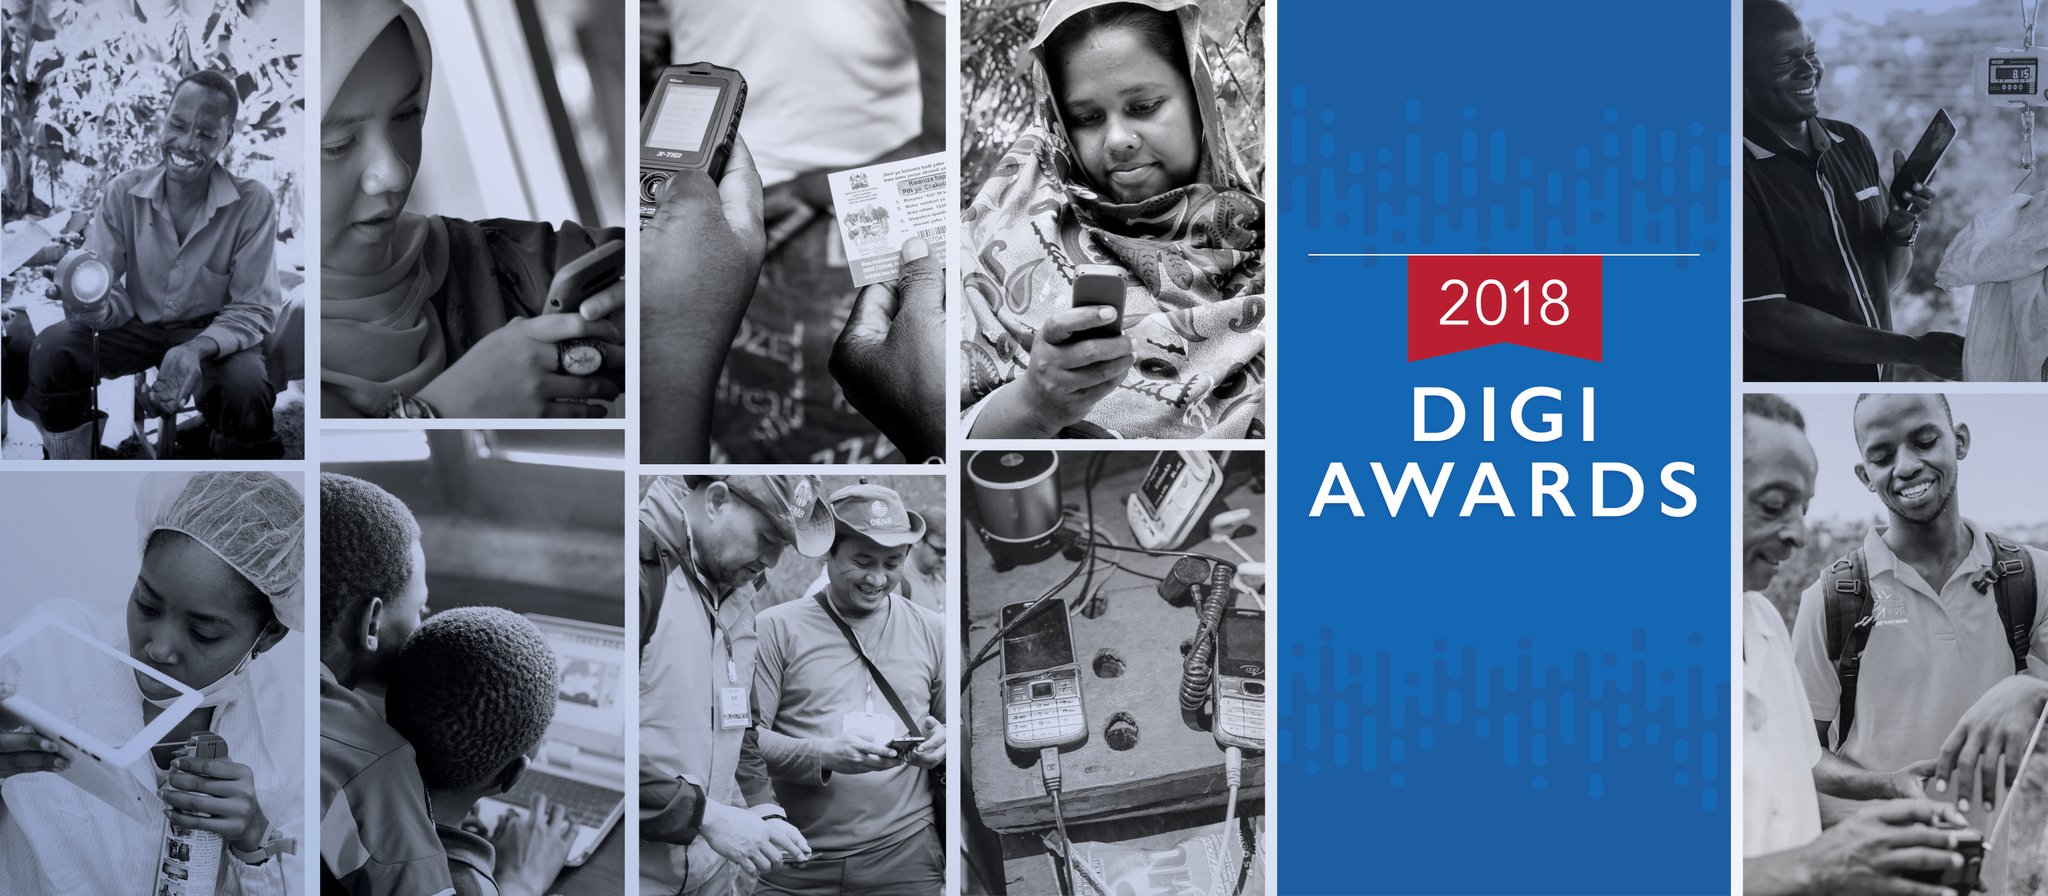 USAID's 2018 Digital Development Awards